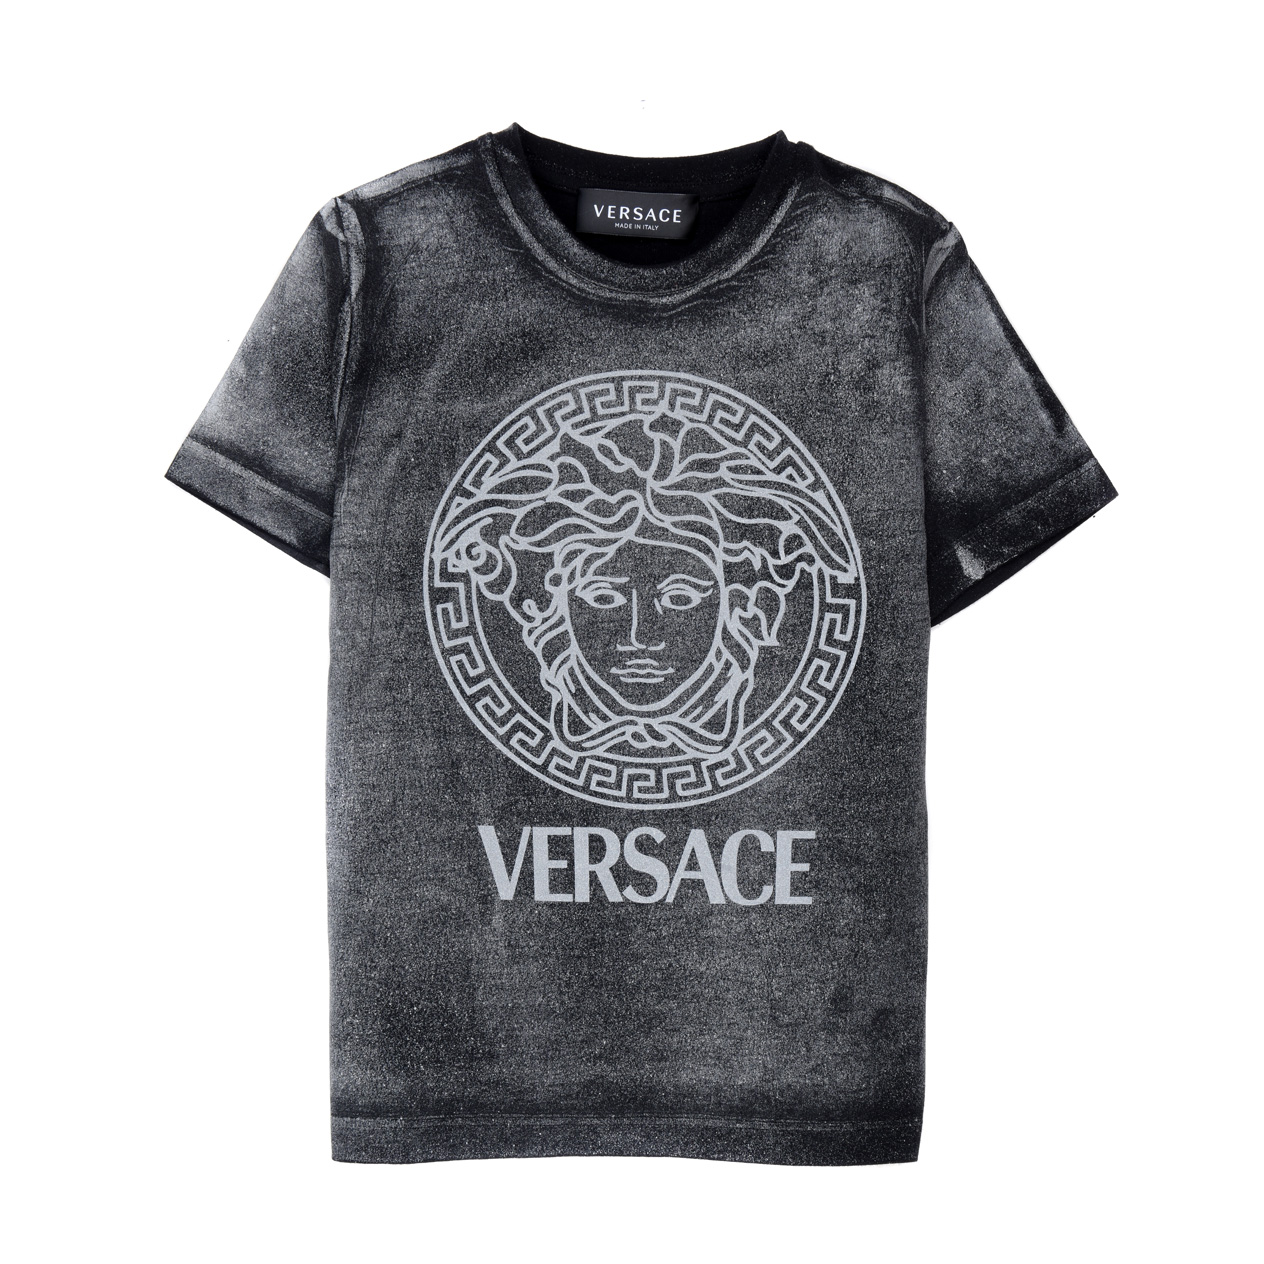 versace_t-shirt_black_74885_1